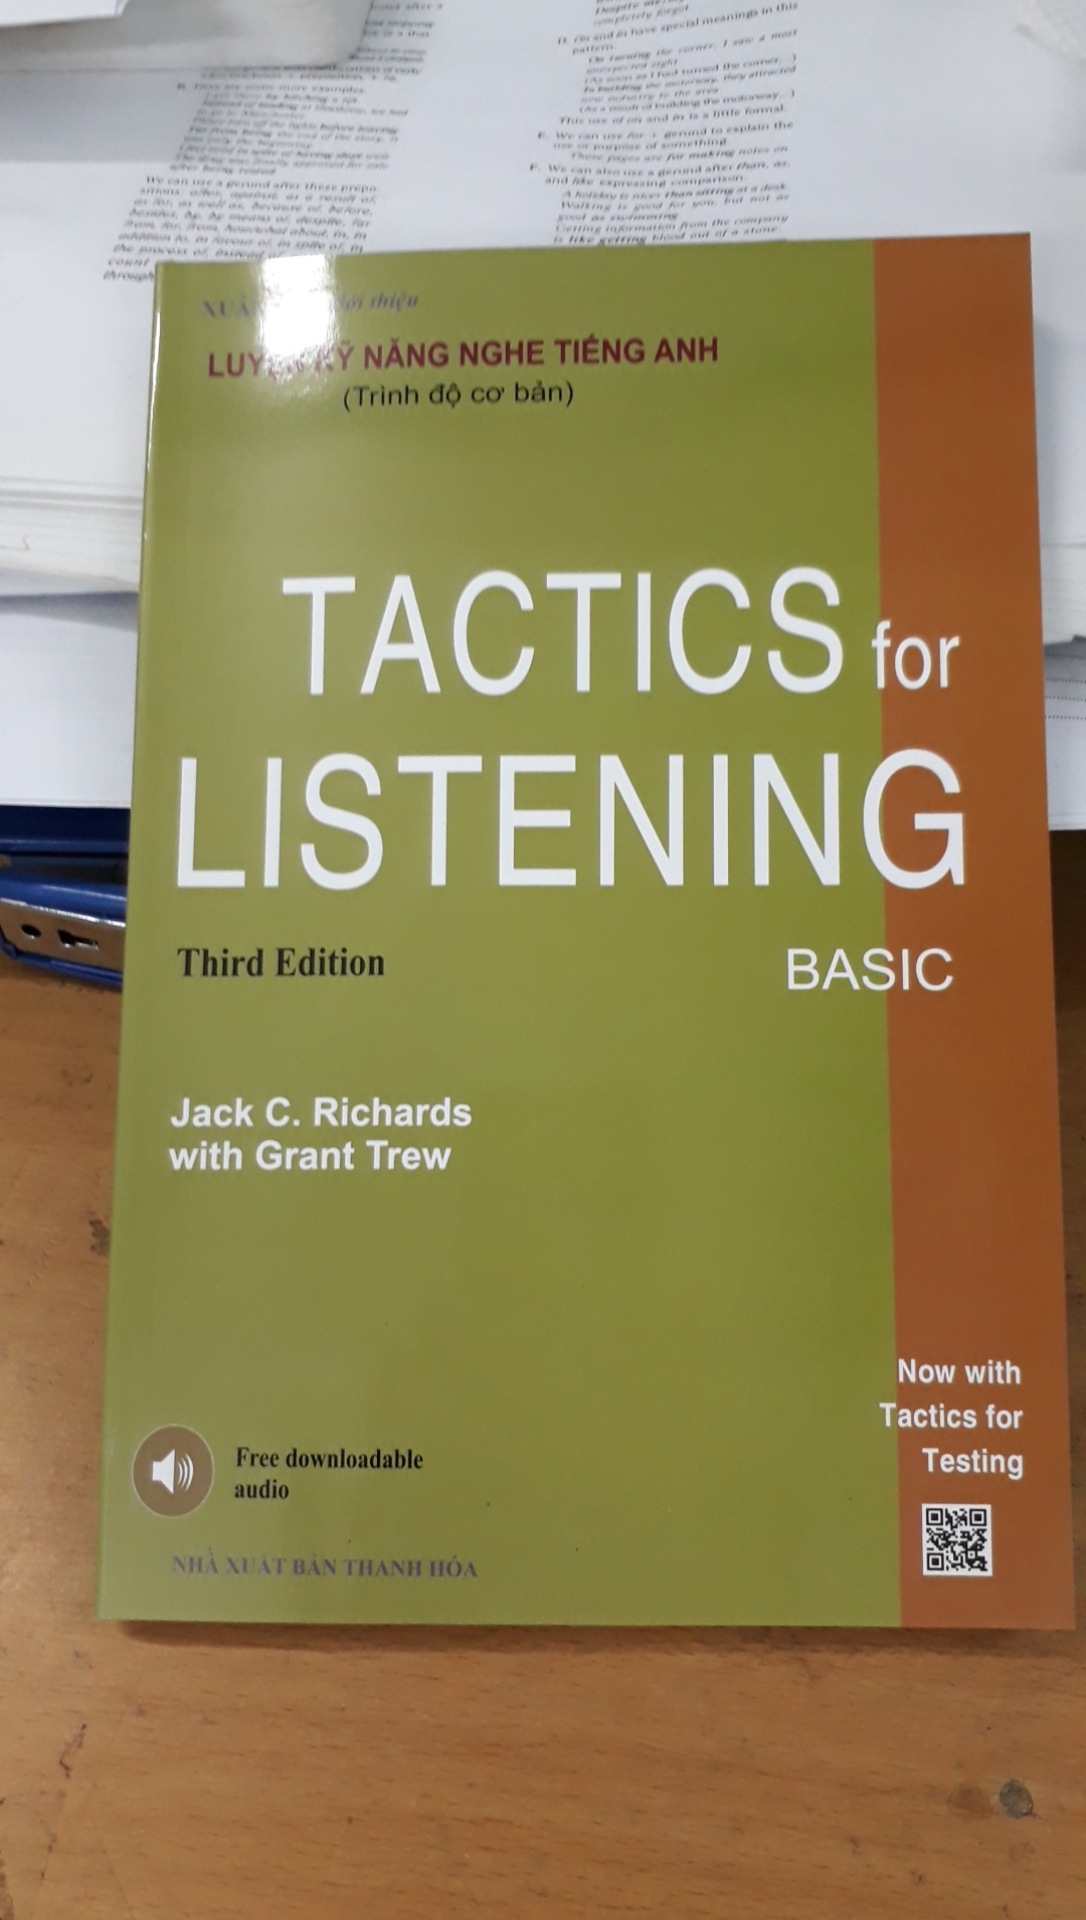 [HCM]Sách - Luyện kỹ năng nghe tiếng Anh (Tactics for Listening - Basic [Third Edition]